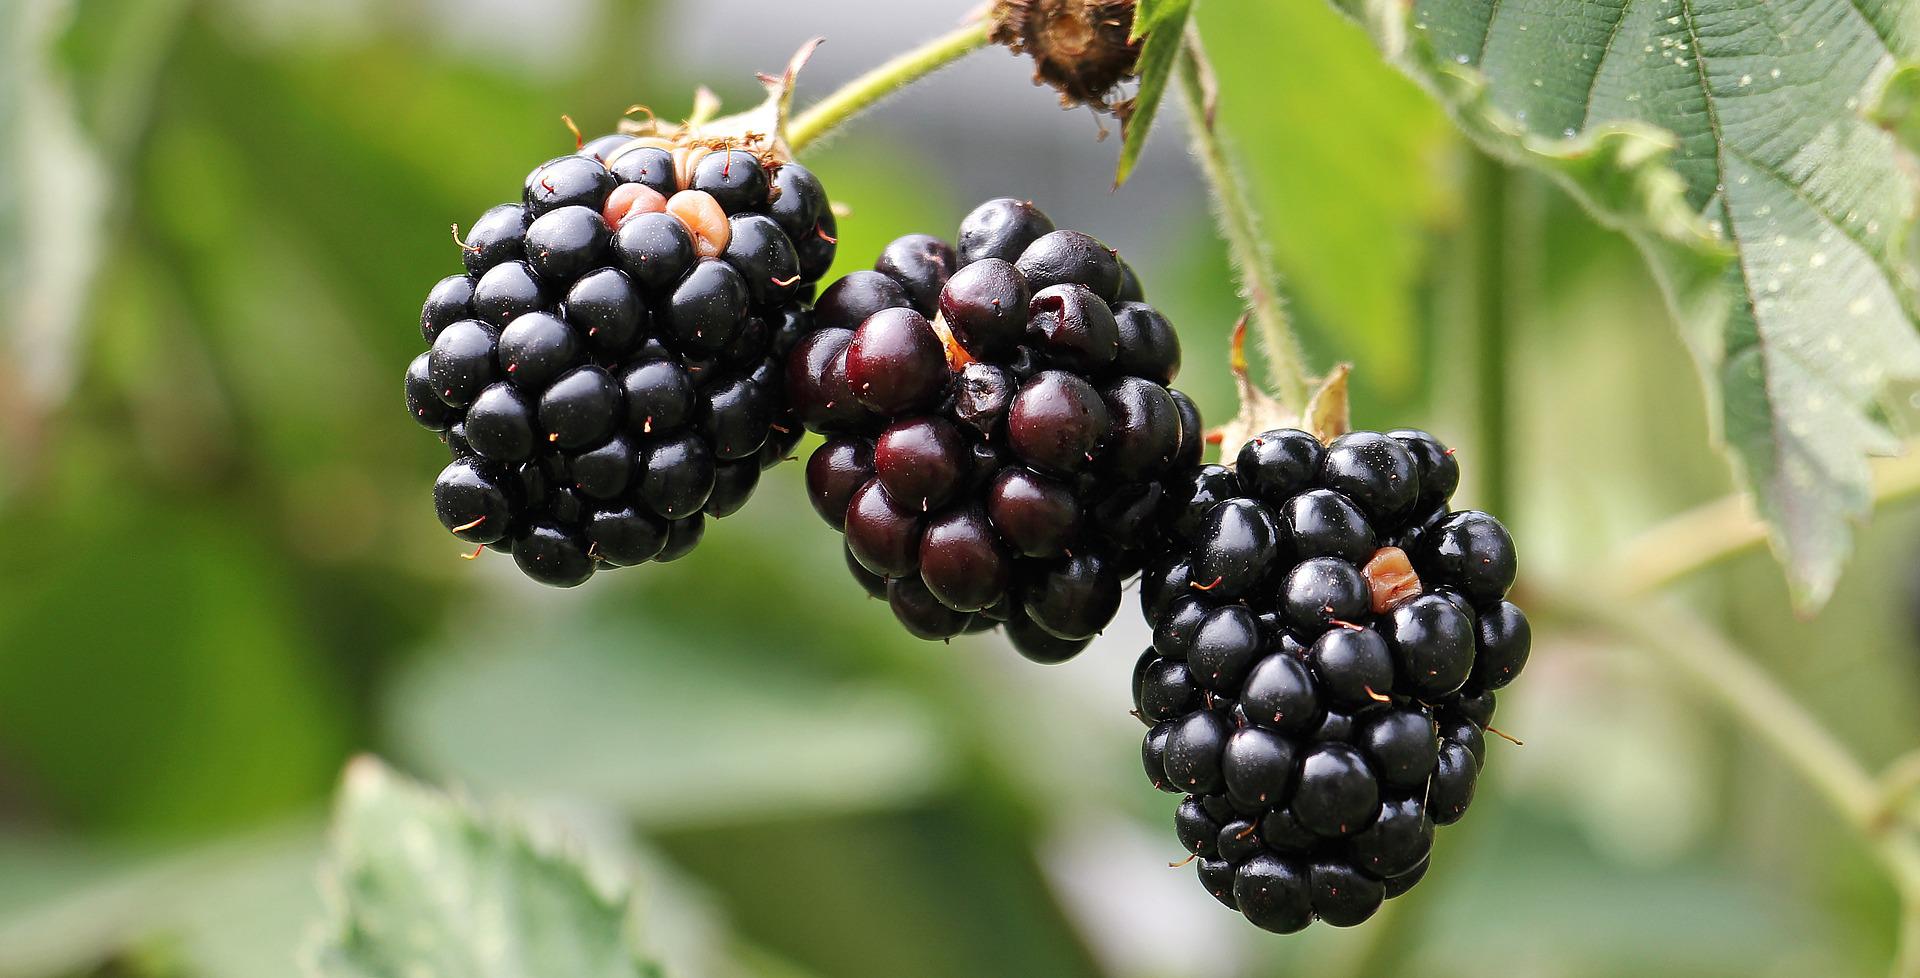 Blackberry farming